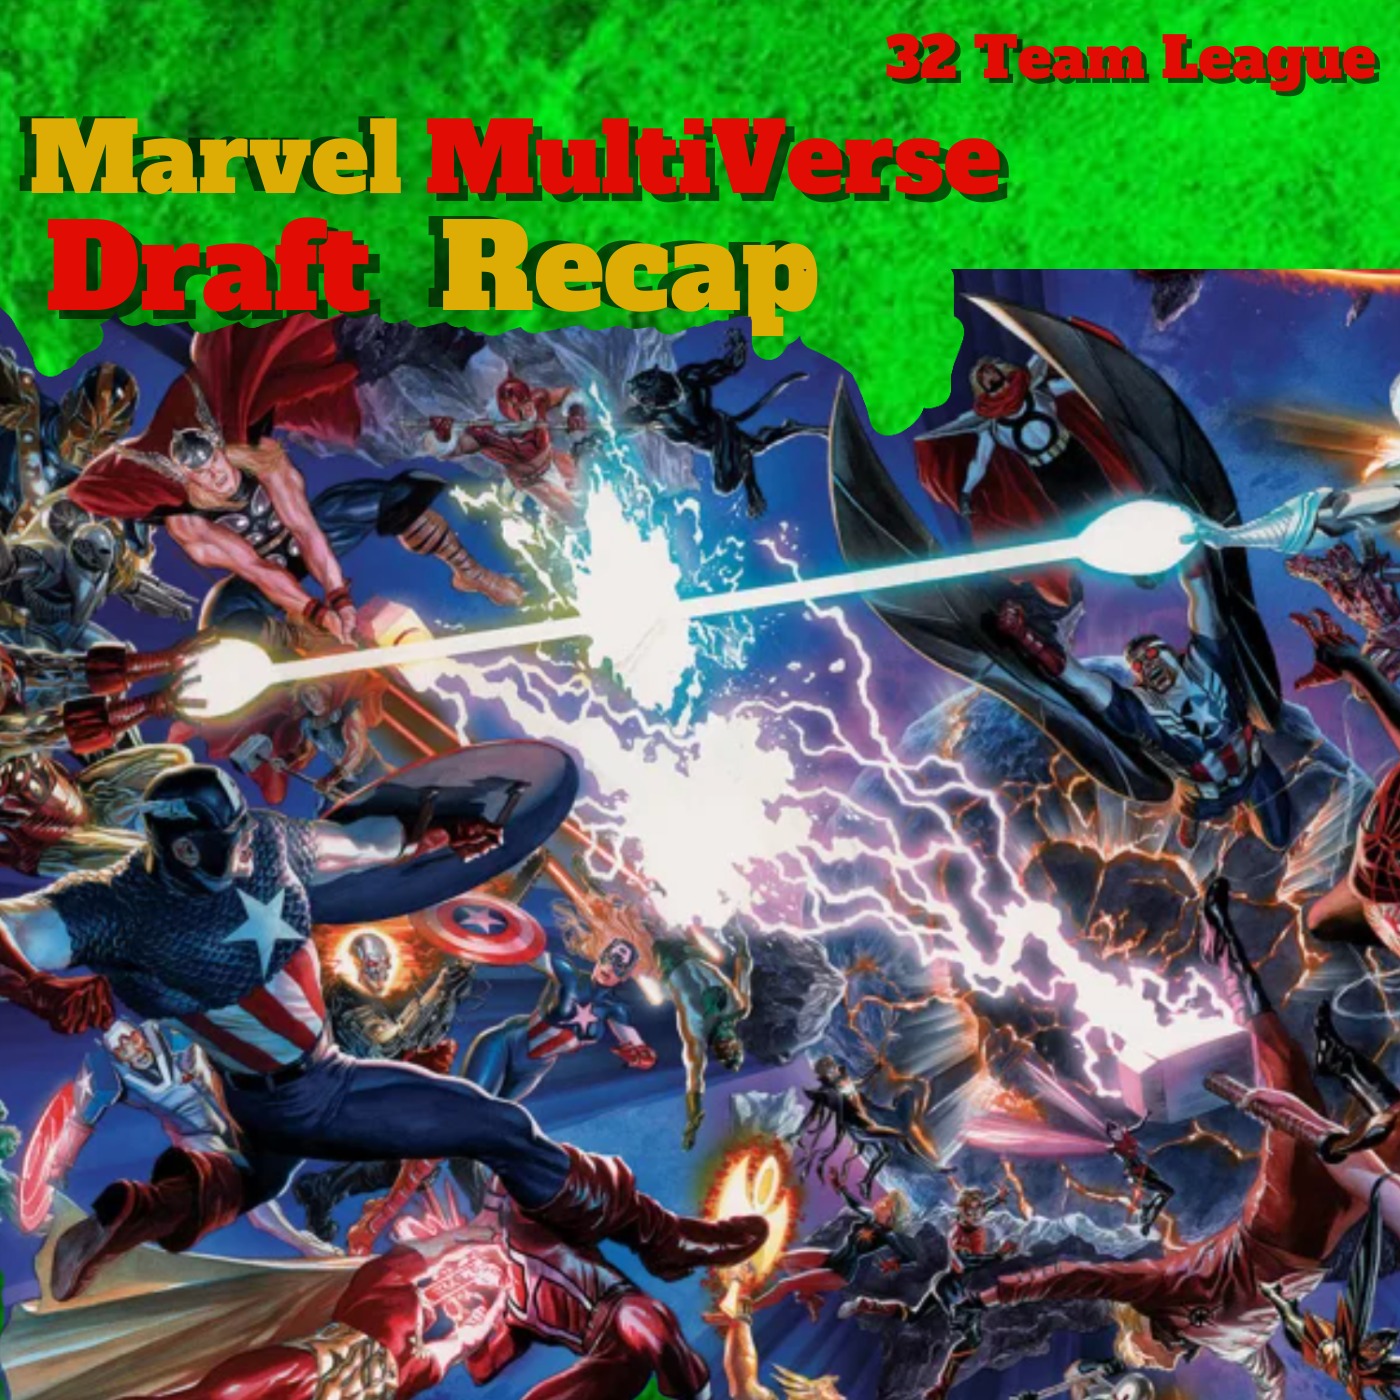 Marvel MultiVerse of Madness 32 Team League Draft Recap Image